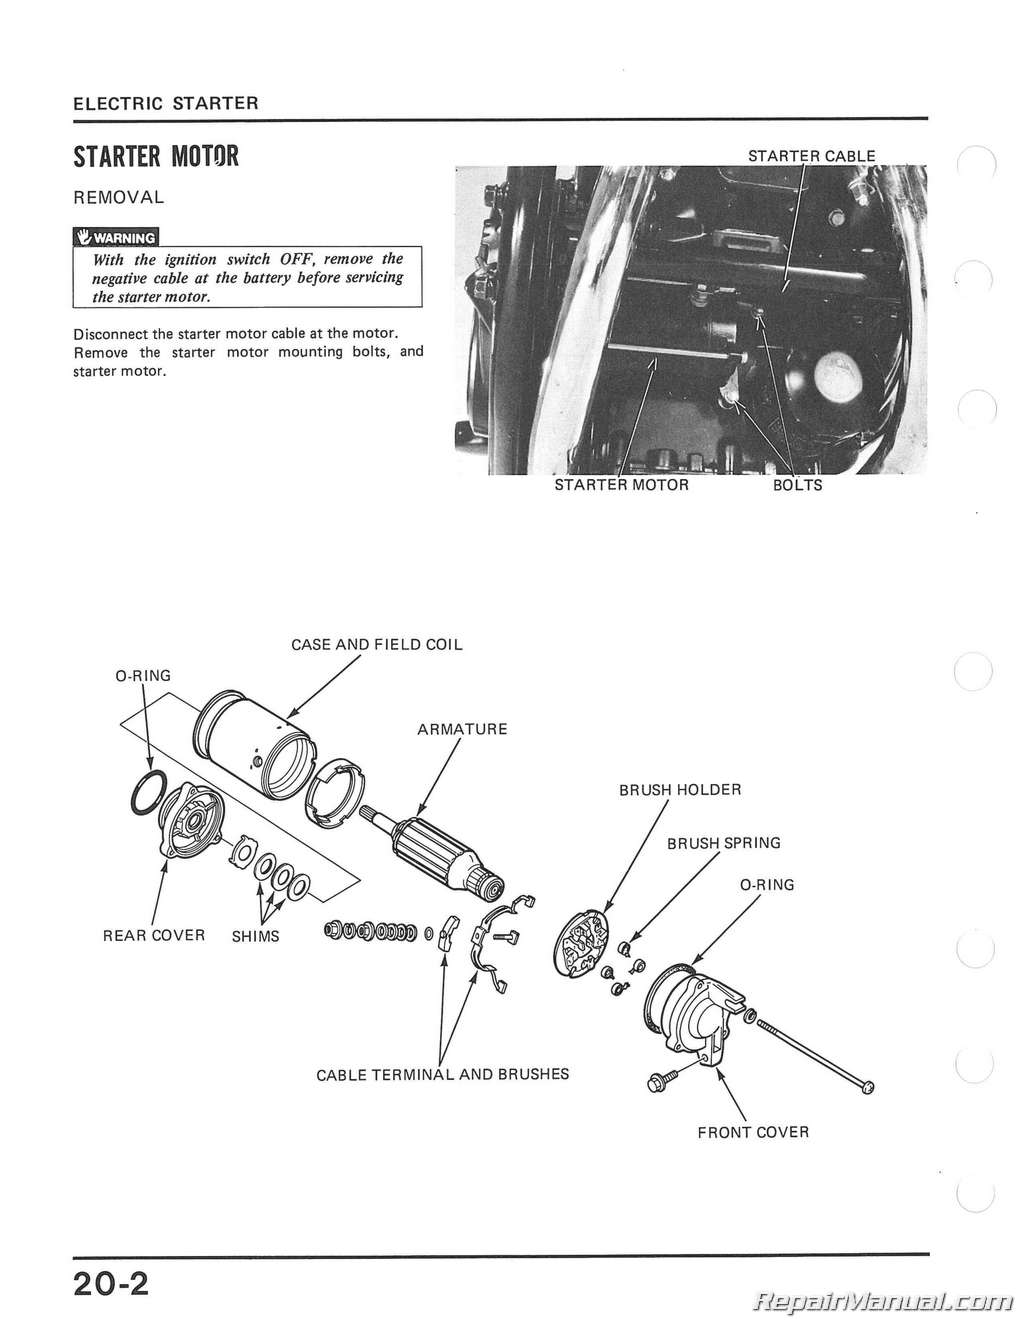 1984 Honda vf700c service manual #4